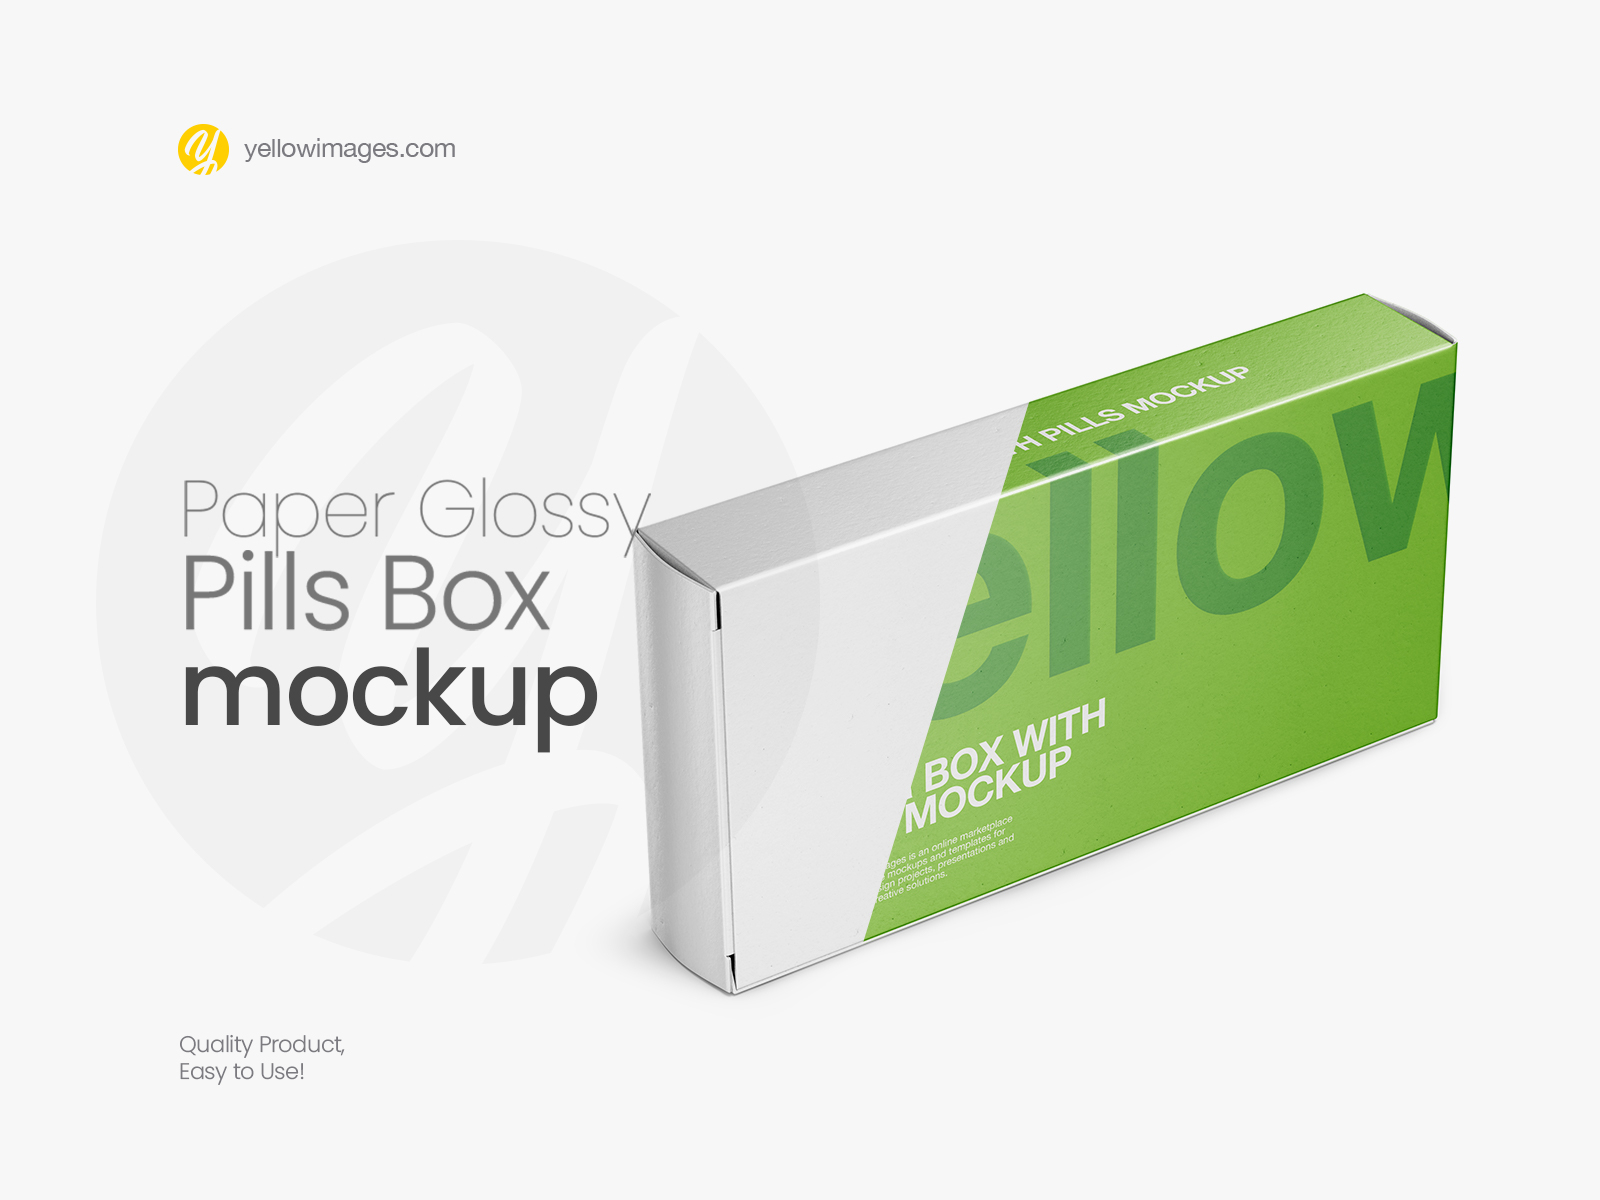 Glossy Metallic Pills Box Mockup Half Side View By Dmytro Ovcharenko On Dribbble